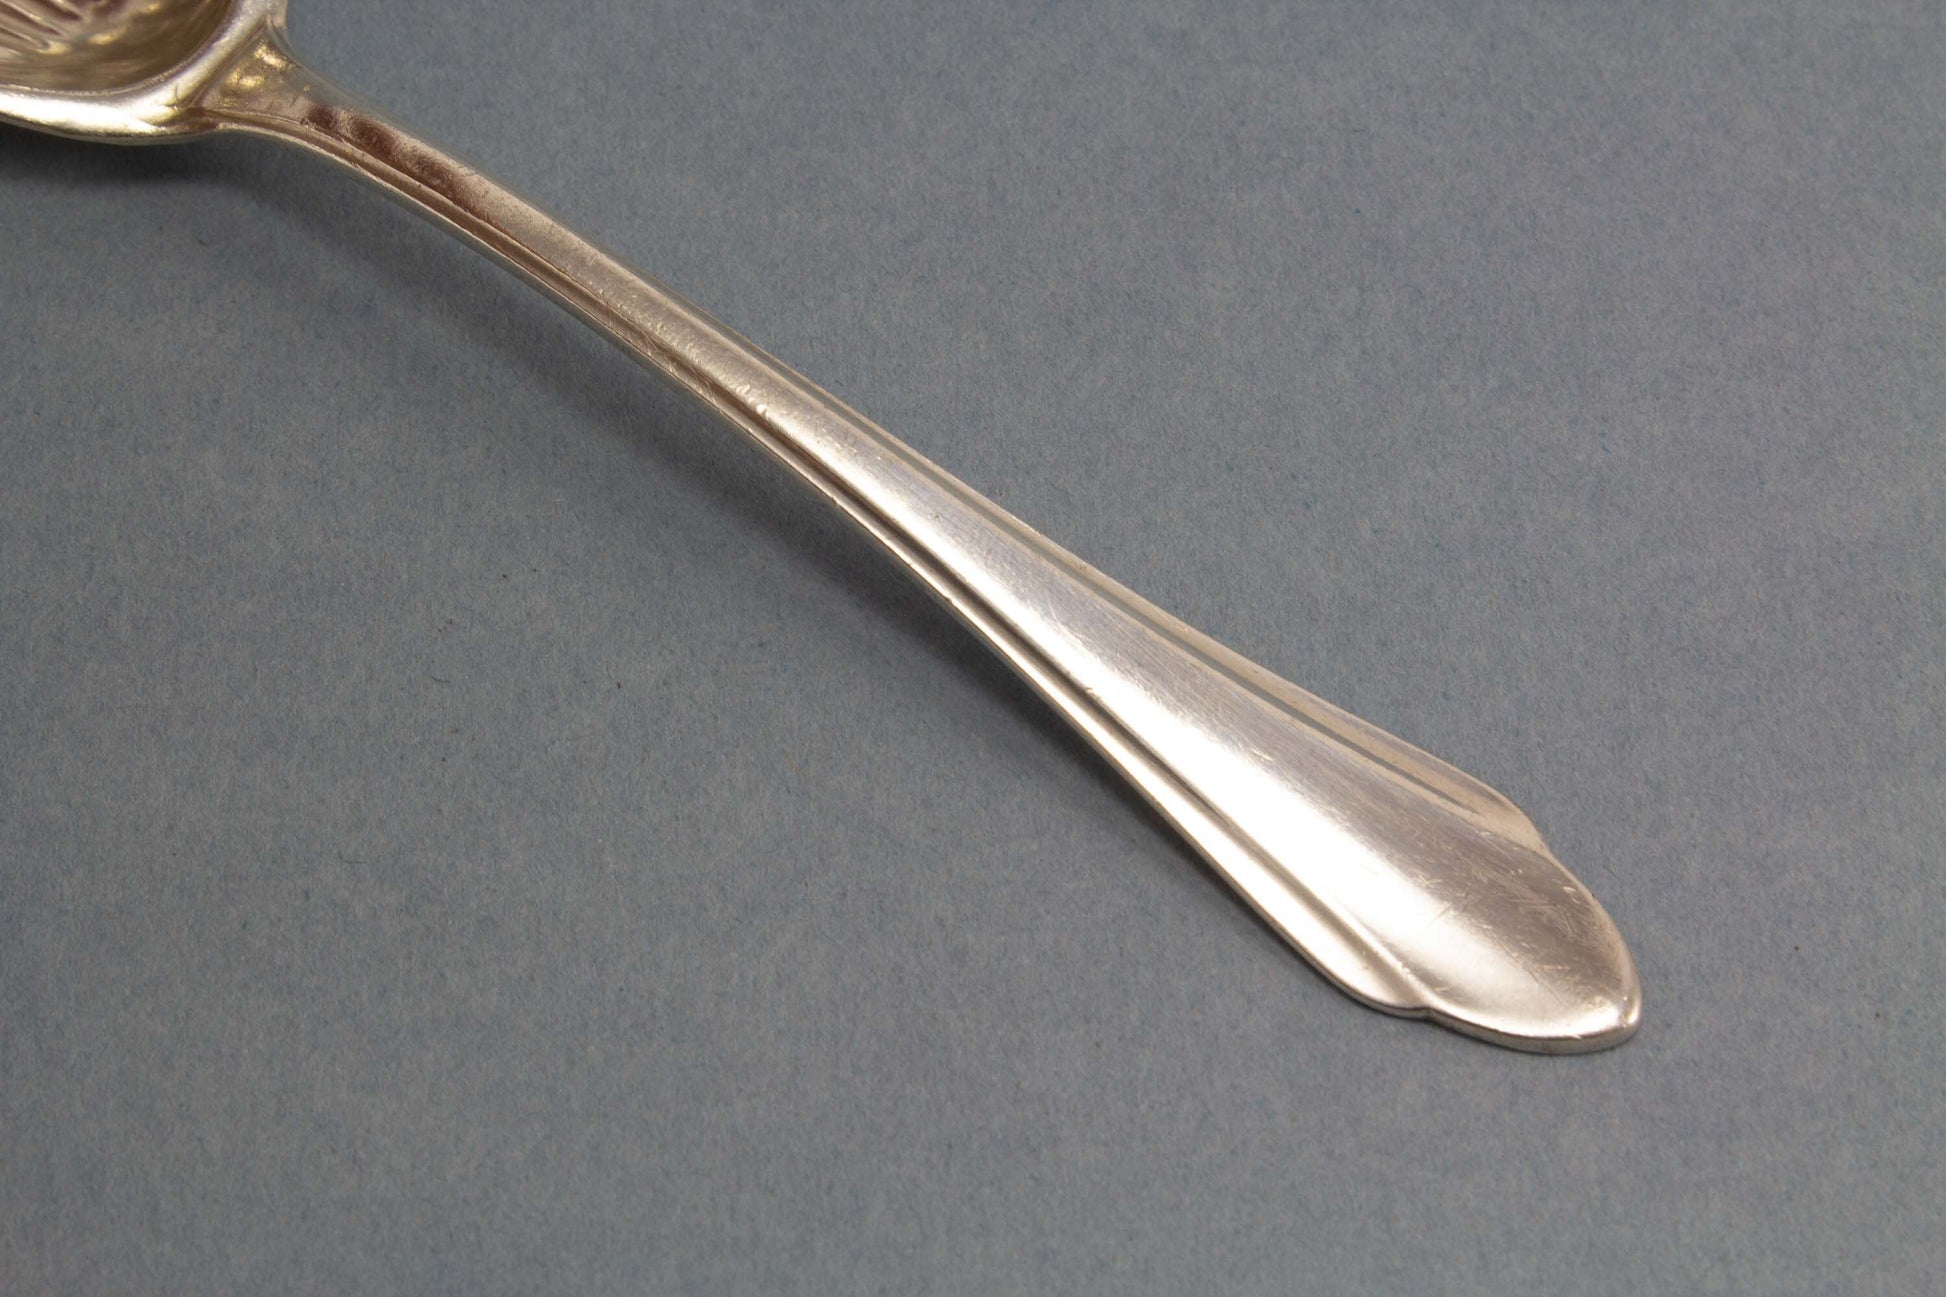 Silvered sugar spoon by BSF, sugar spreader